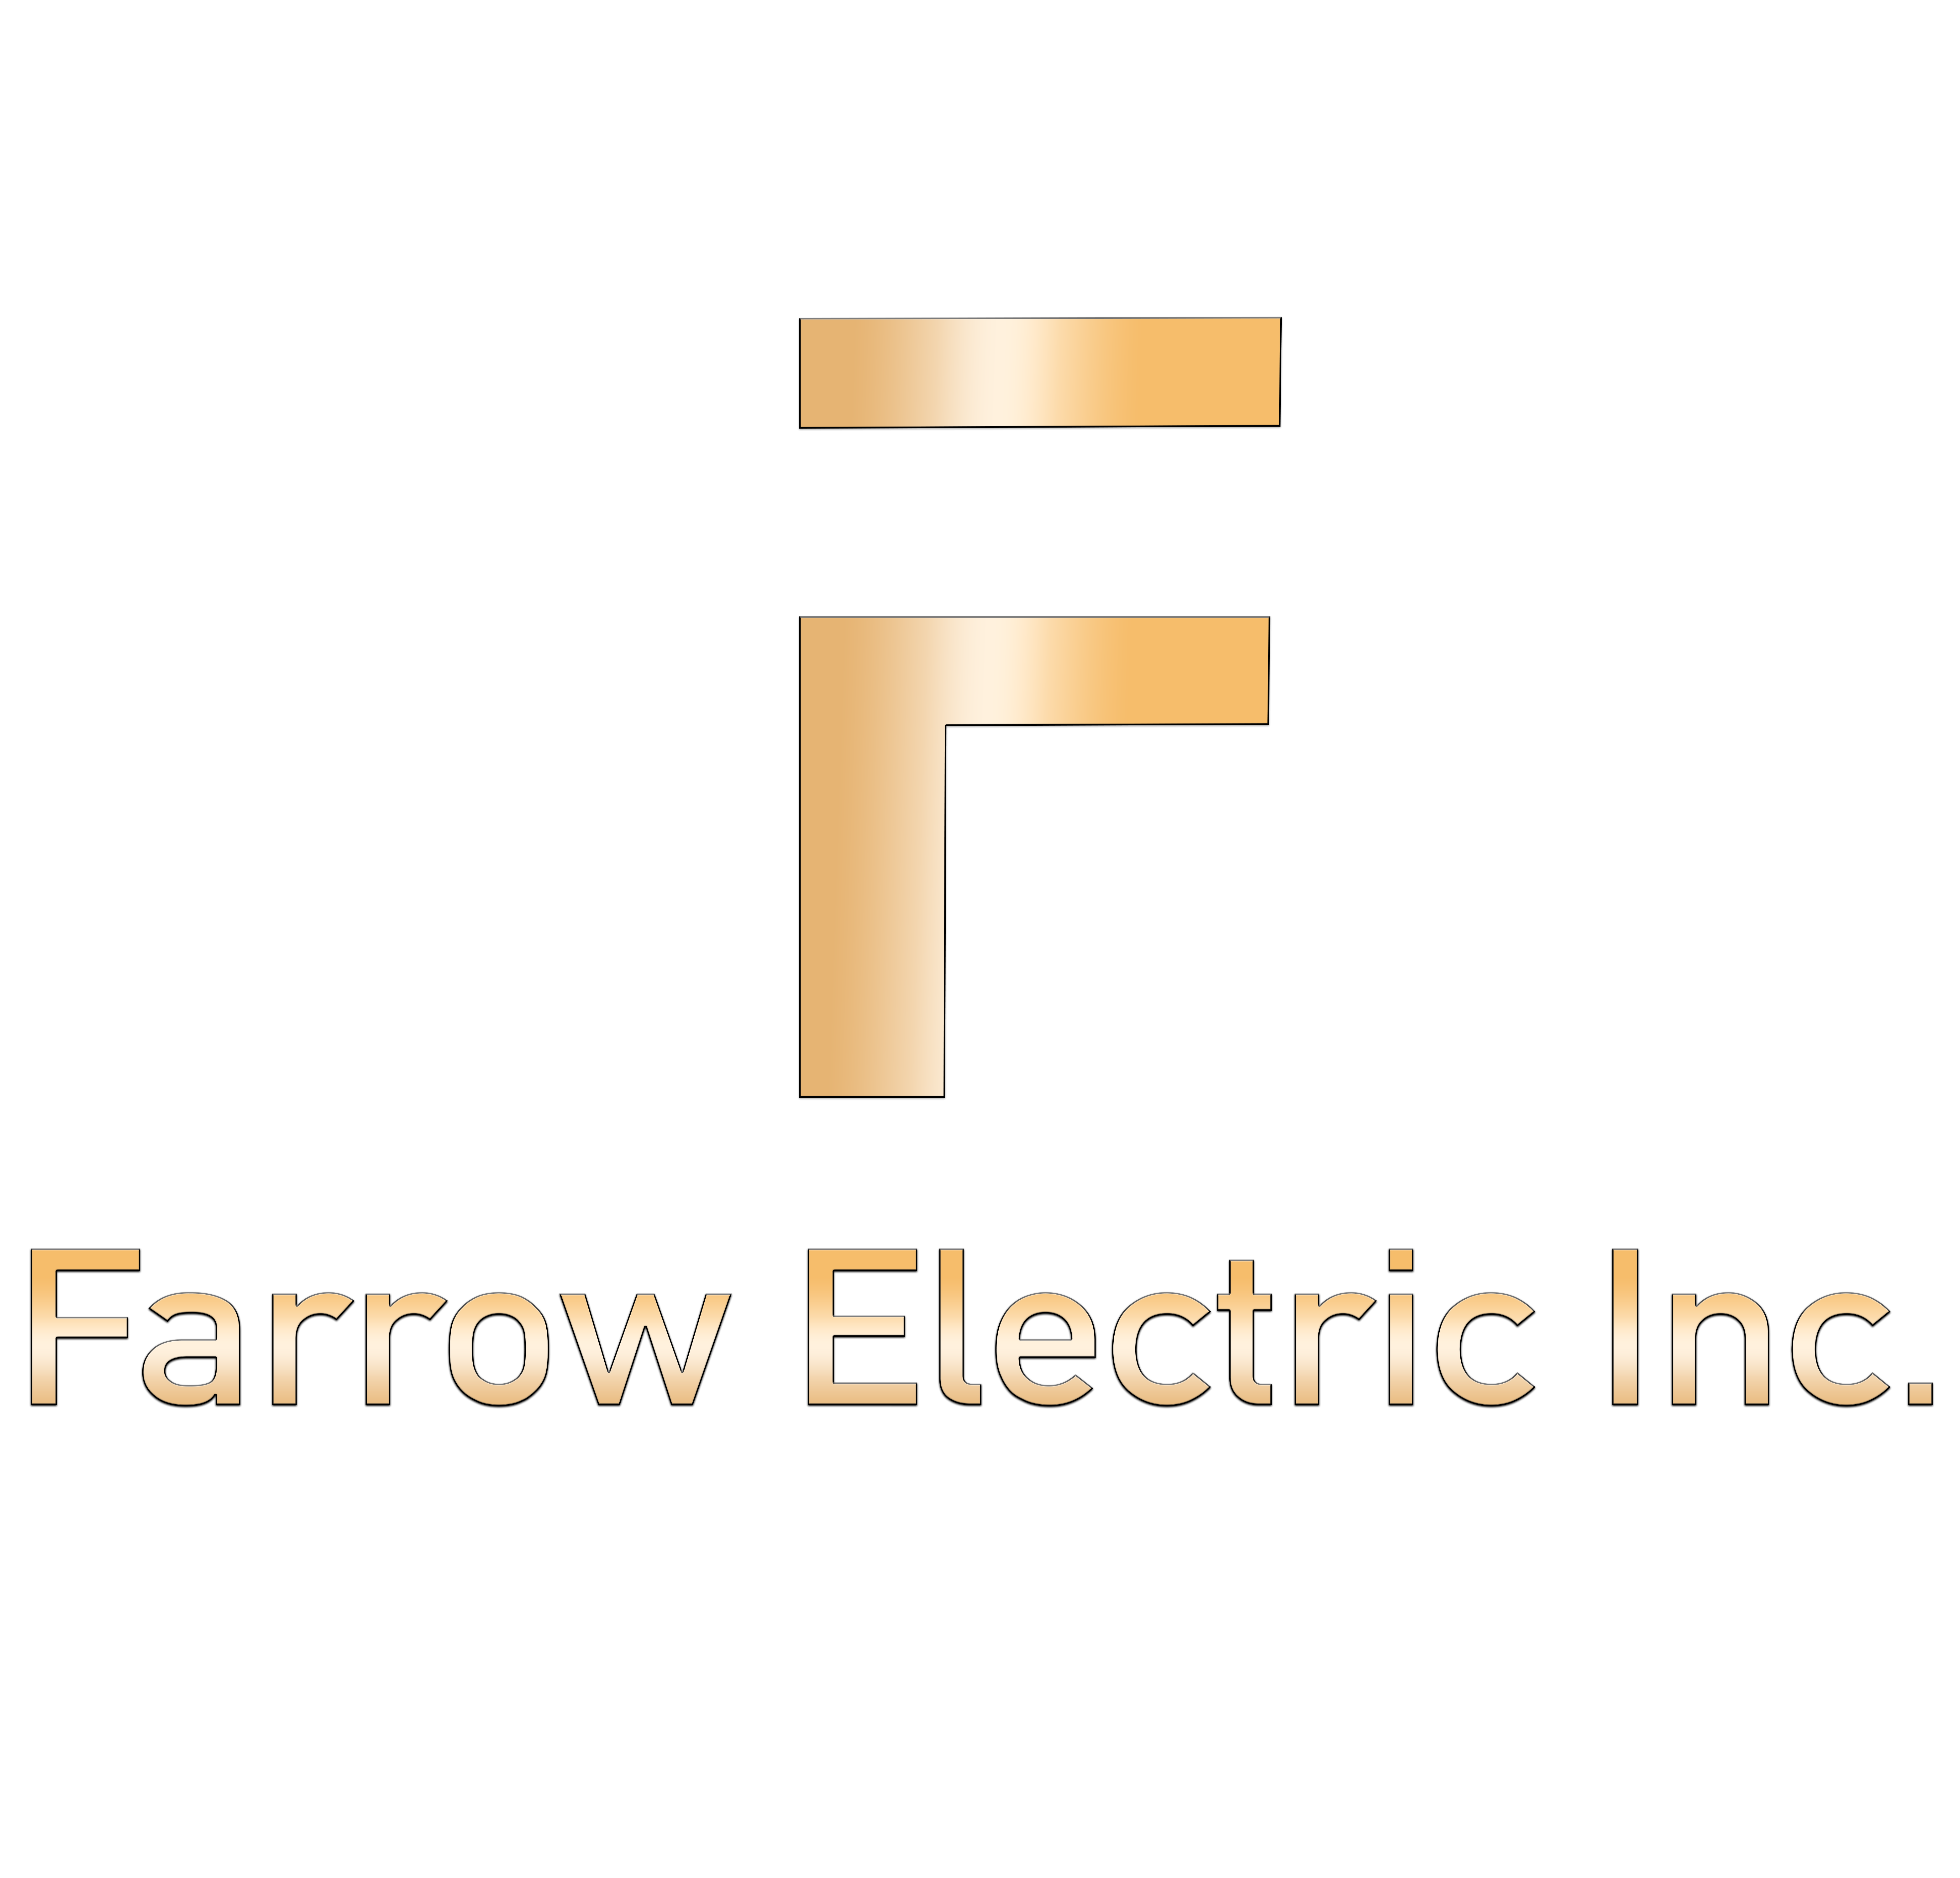 Farrow Electric Inc.